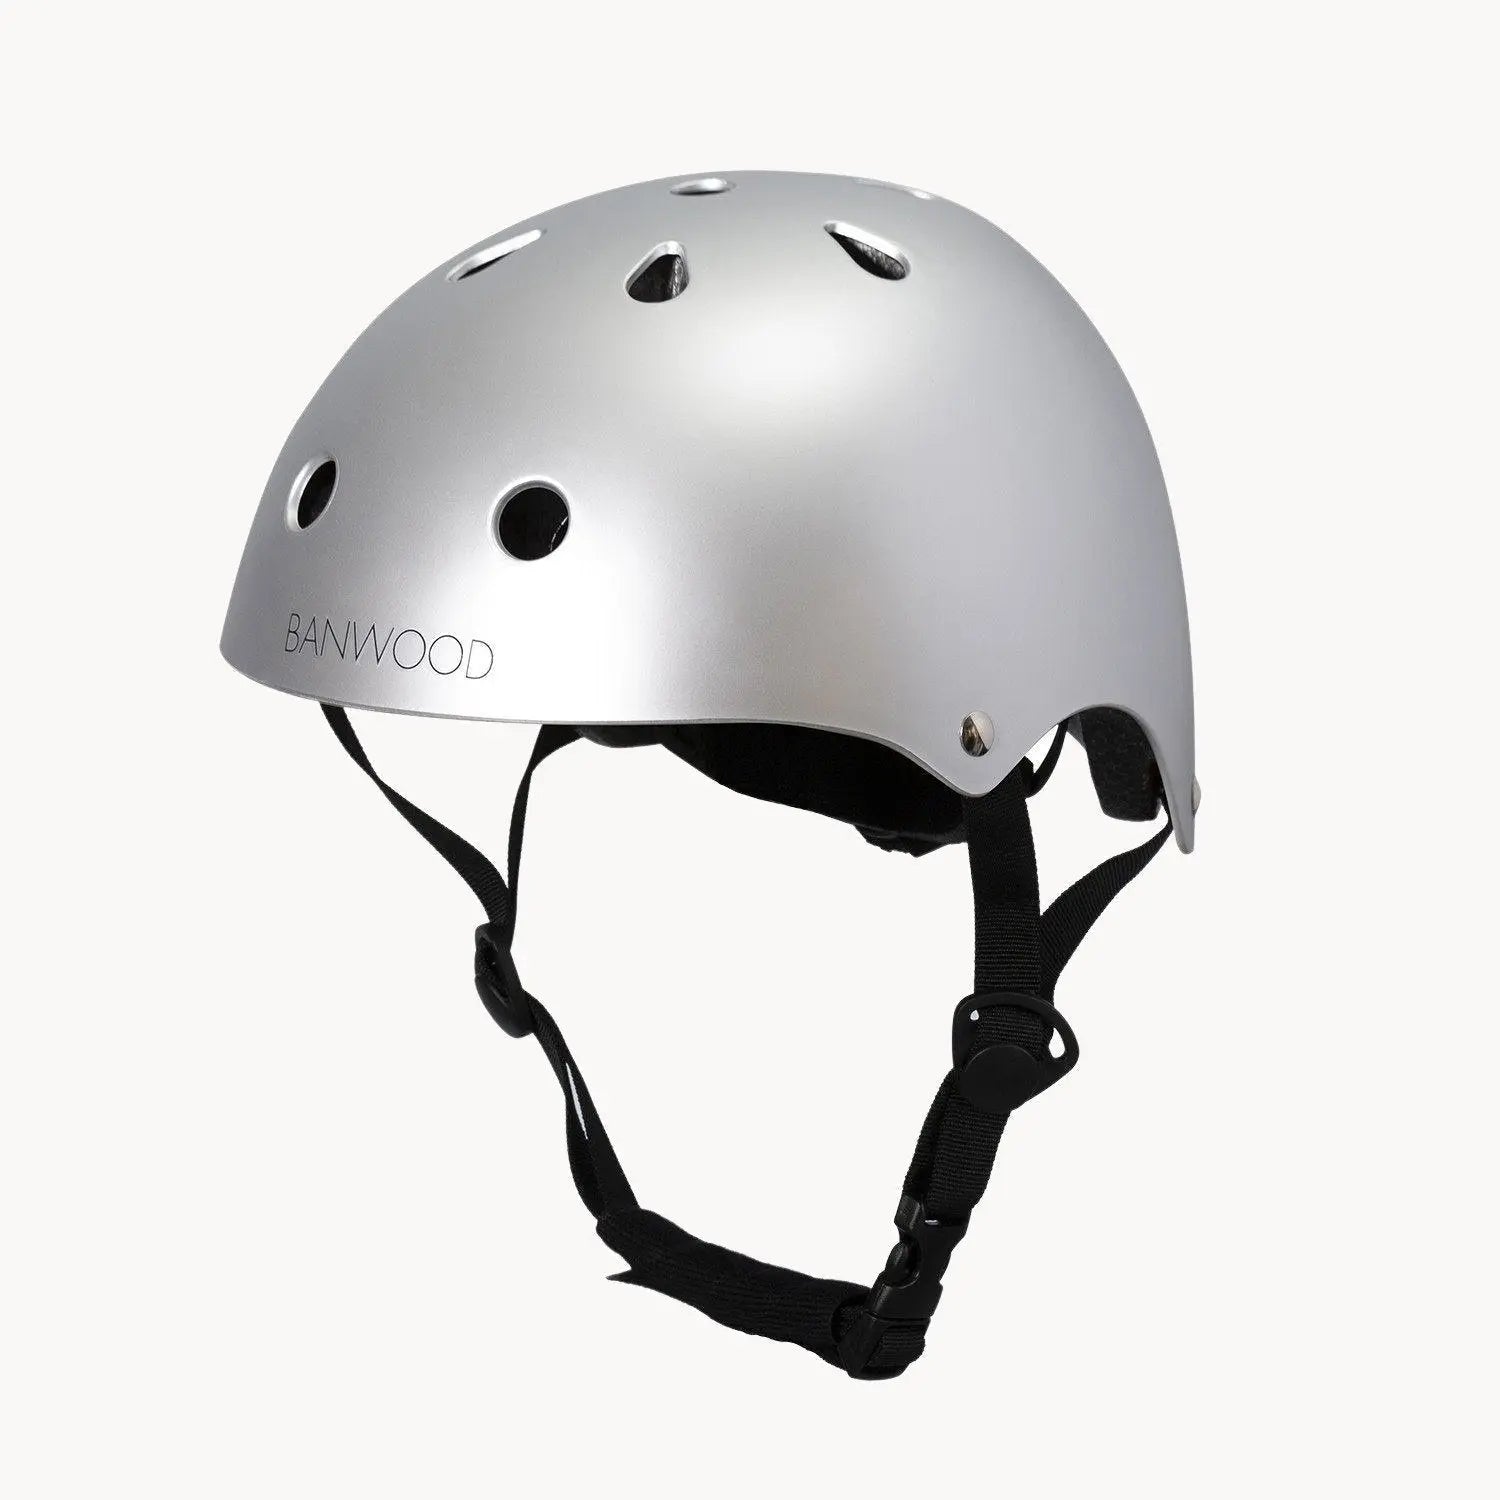 Classic Bicycle Helmet for Kids, Chrome Lightweight Helmet, Bike Safety Gear  Banwood   